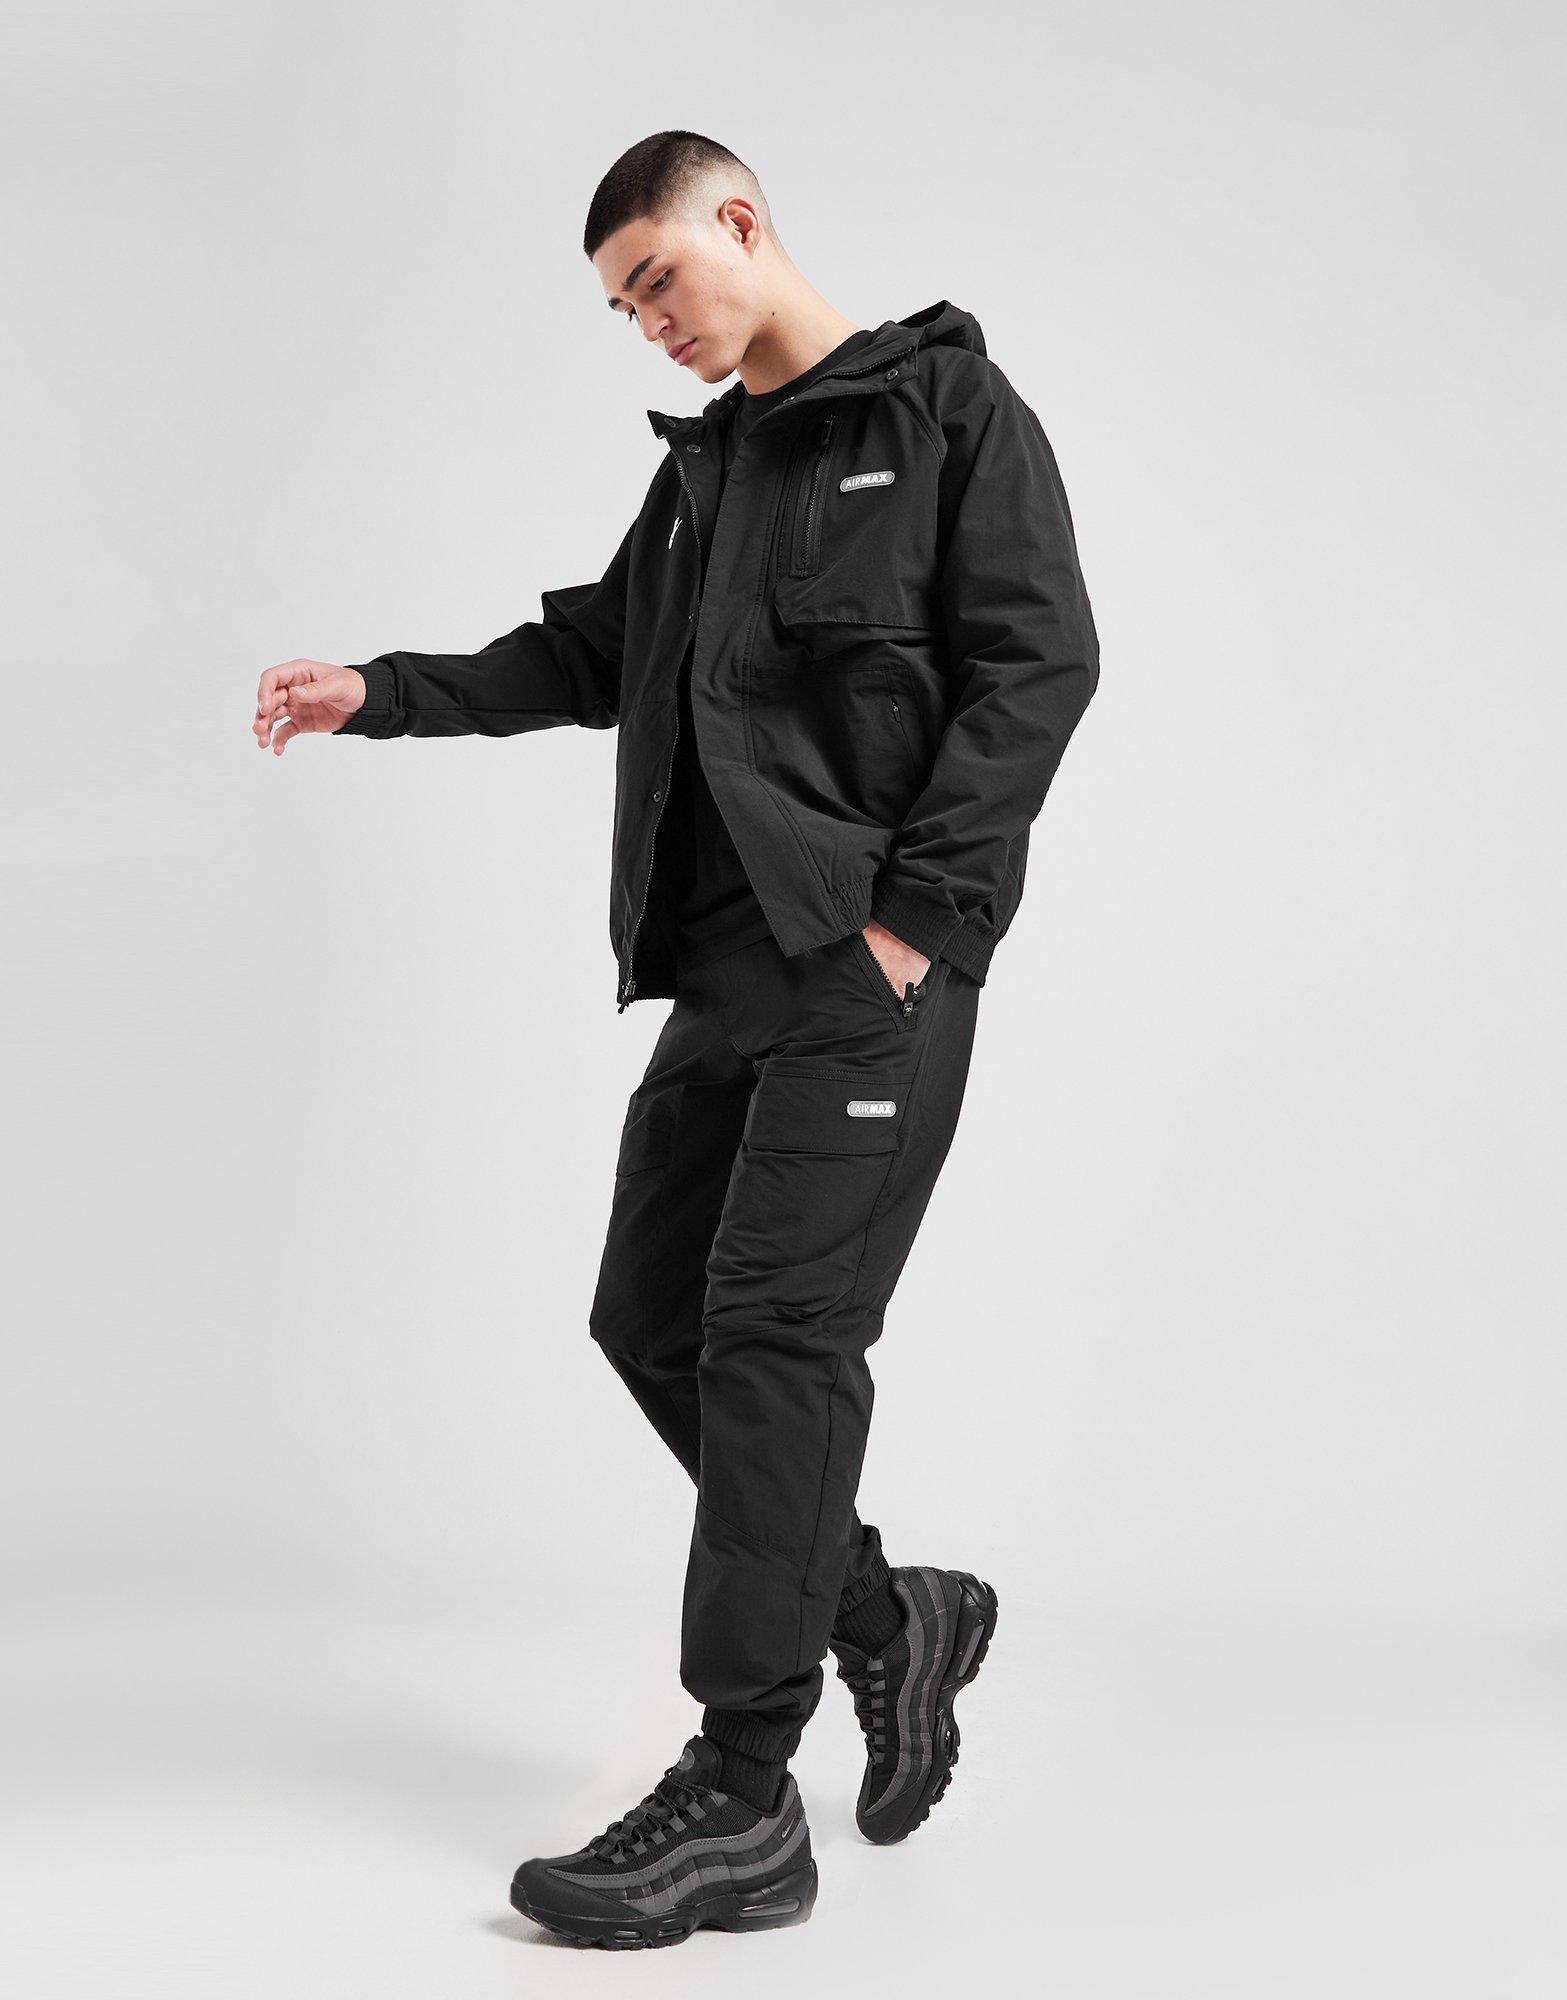 Nike Dri-FIT Academy Woven Track Pant, Cool Grey / Black / Black